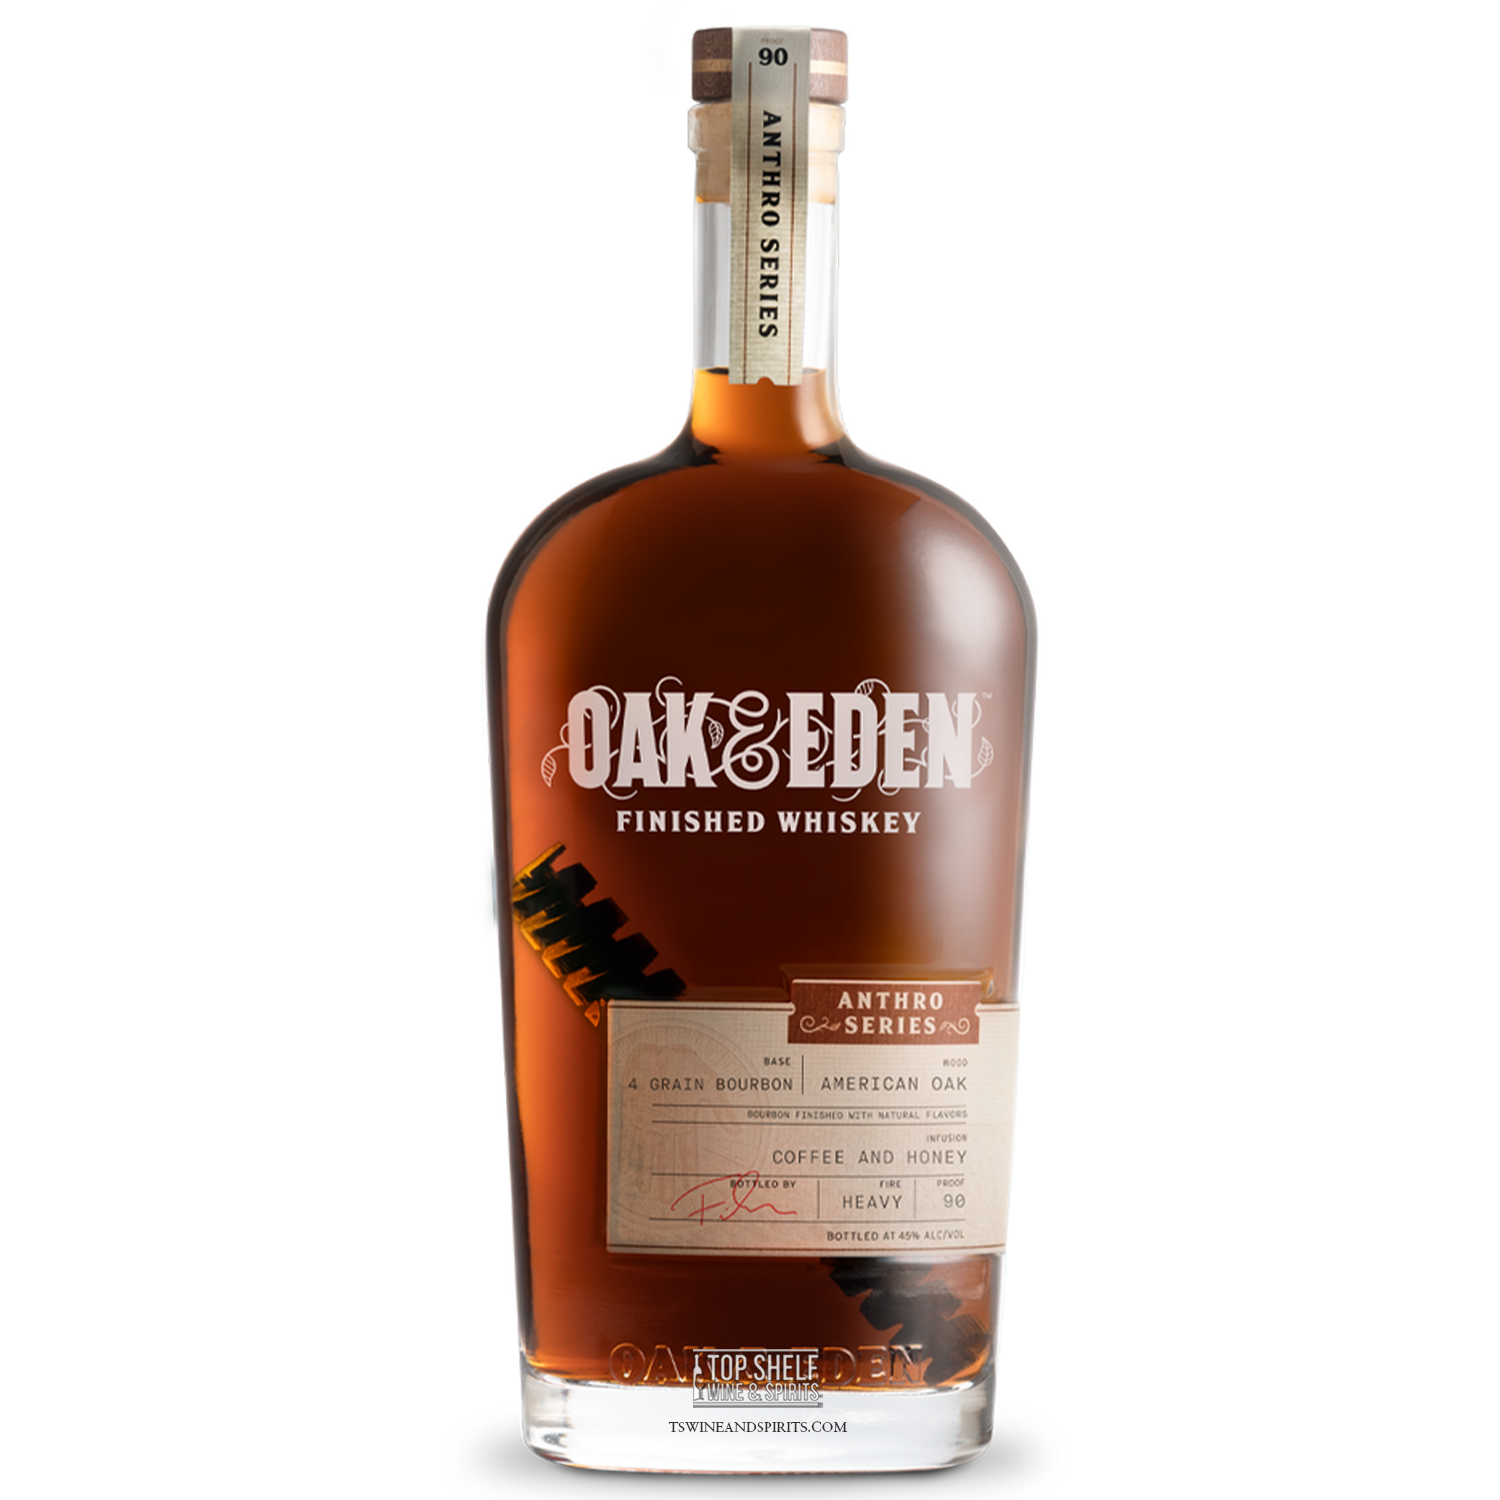 Oak & Eden Tyler Filmore Bourbon (Anthro Series)